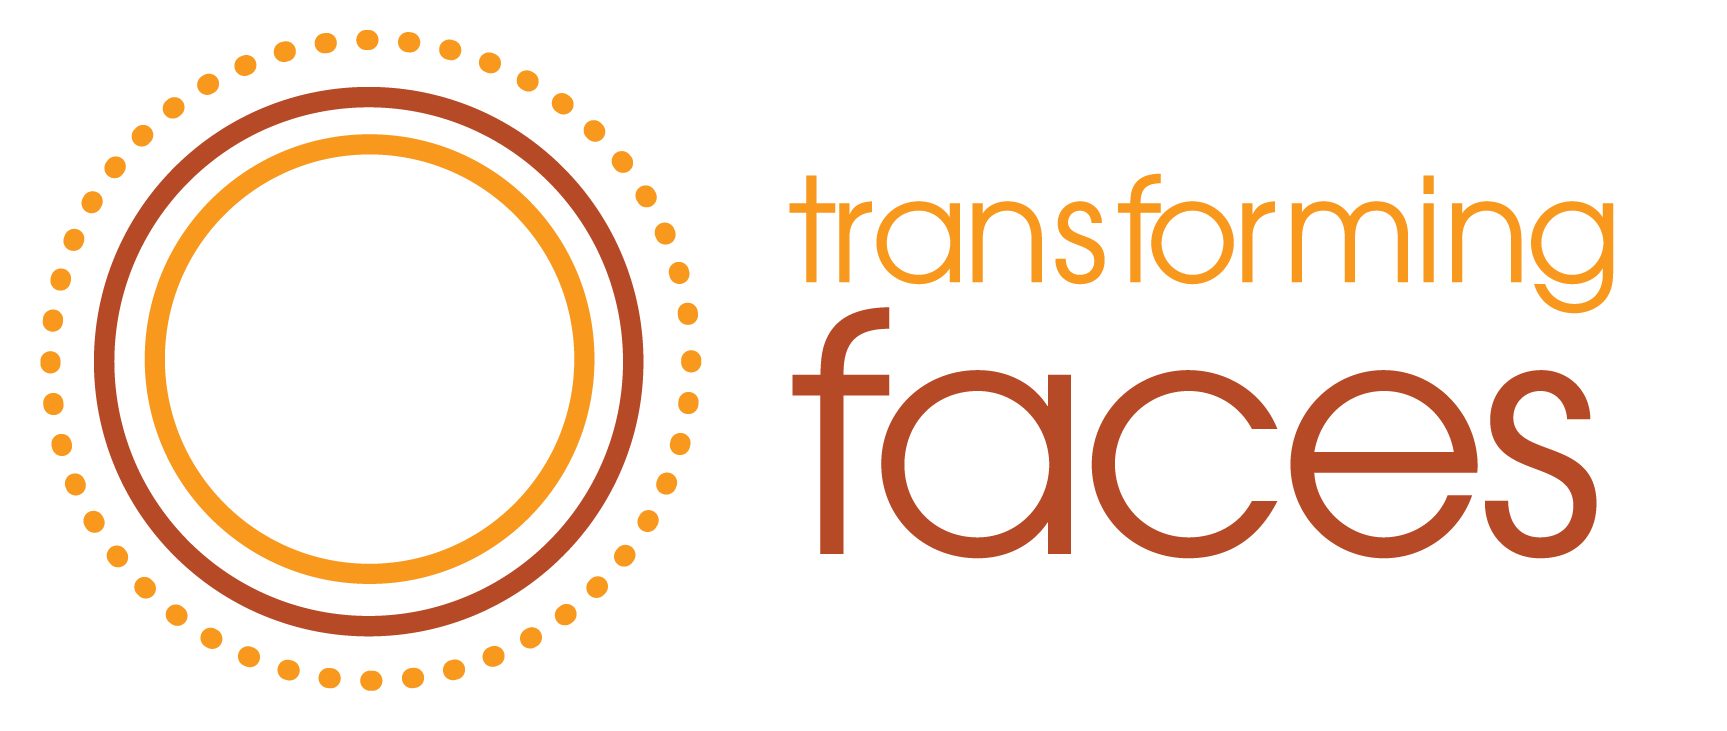 Faces Logo - transforming faces logo (1) | Transforming Faces